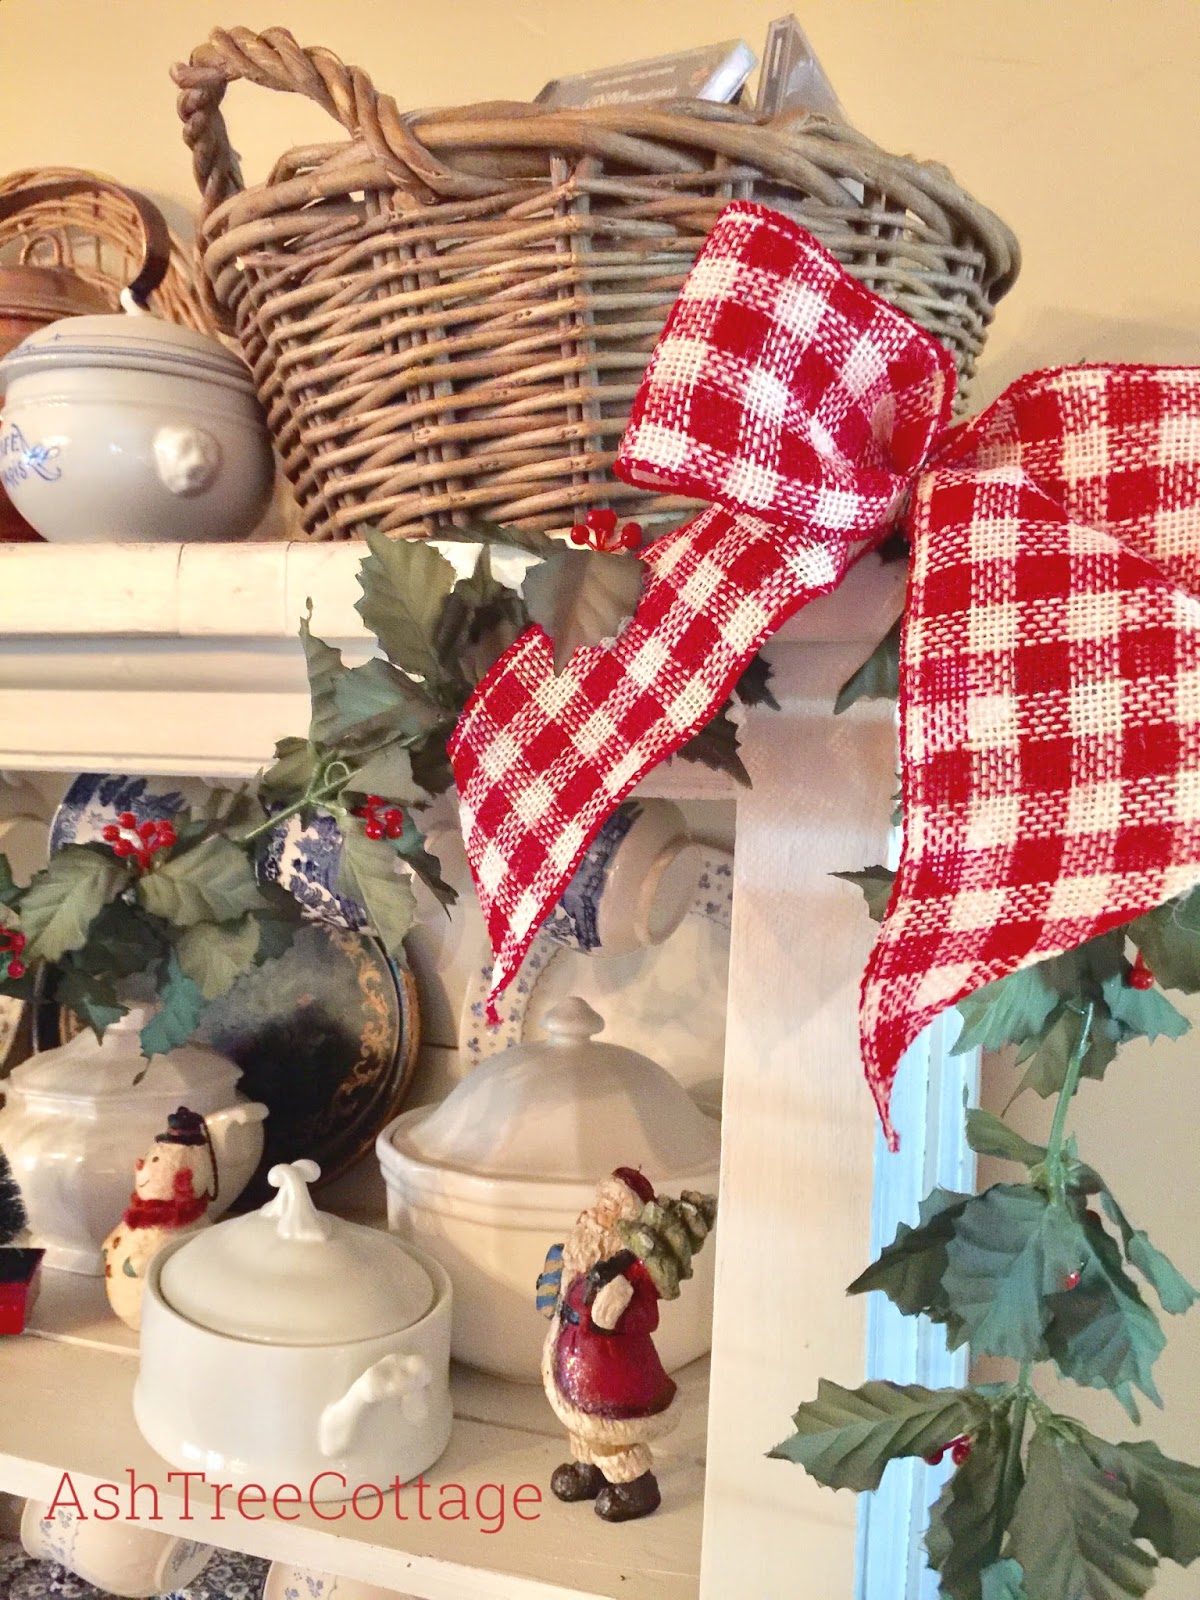 Ash Tree Cottage: My Christmas Welsh Dresser